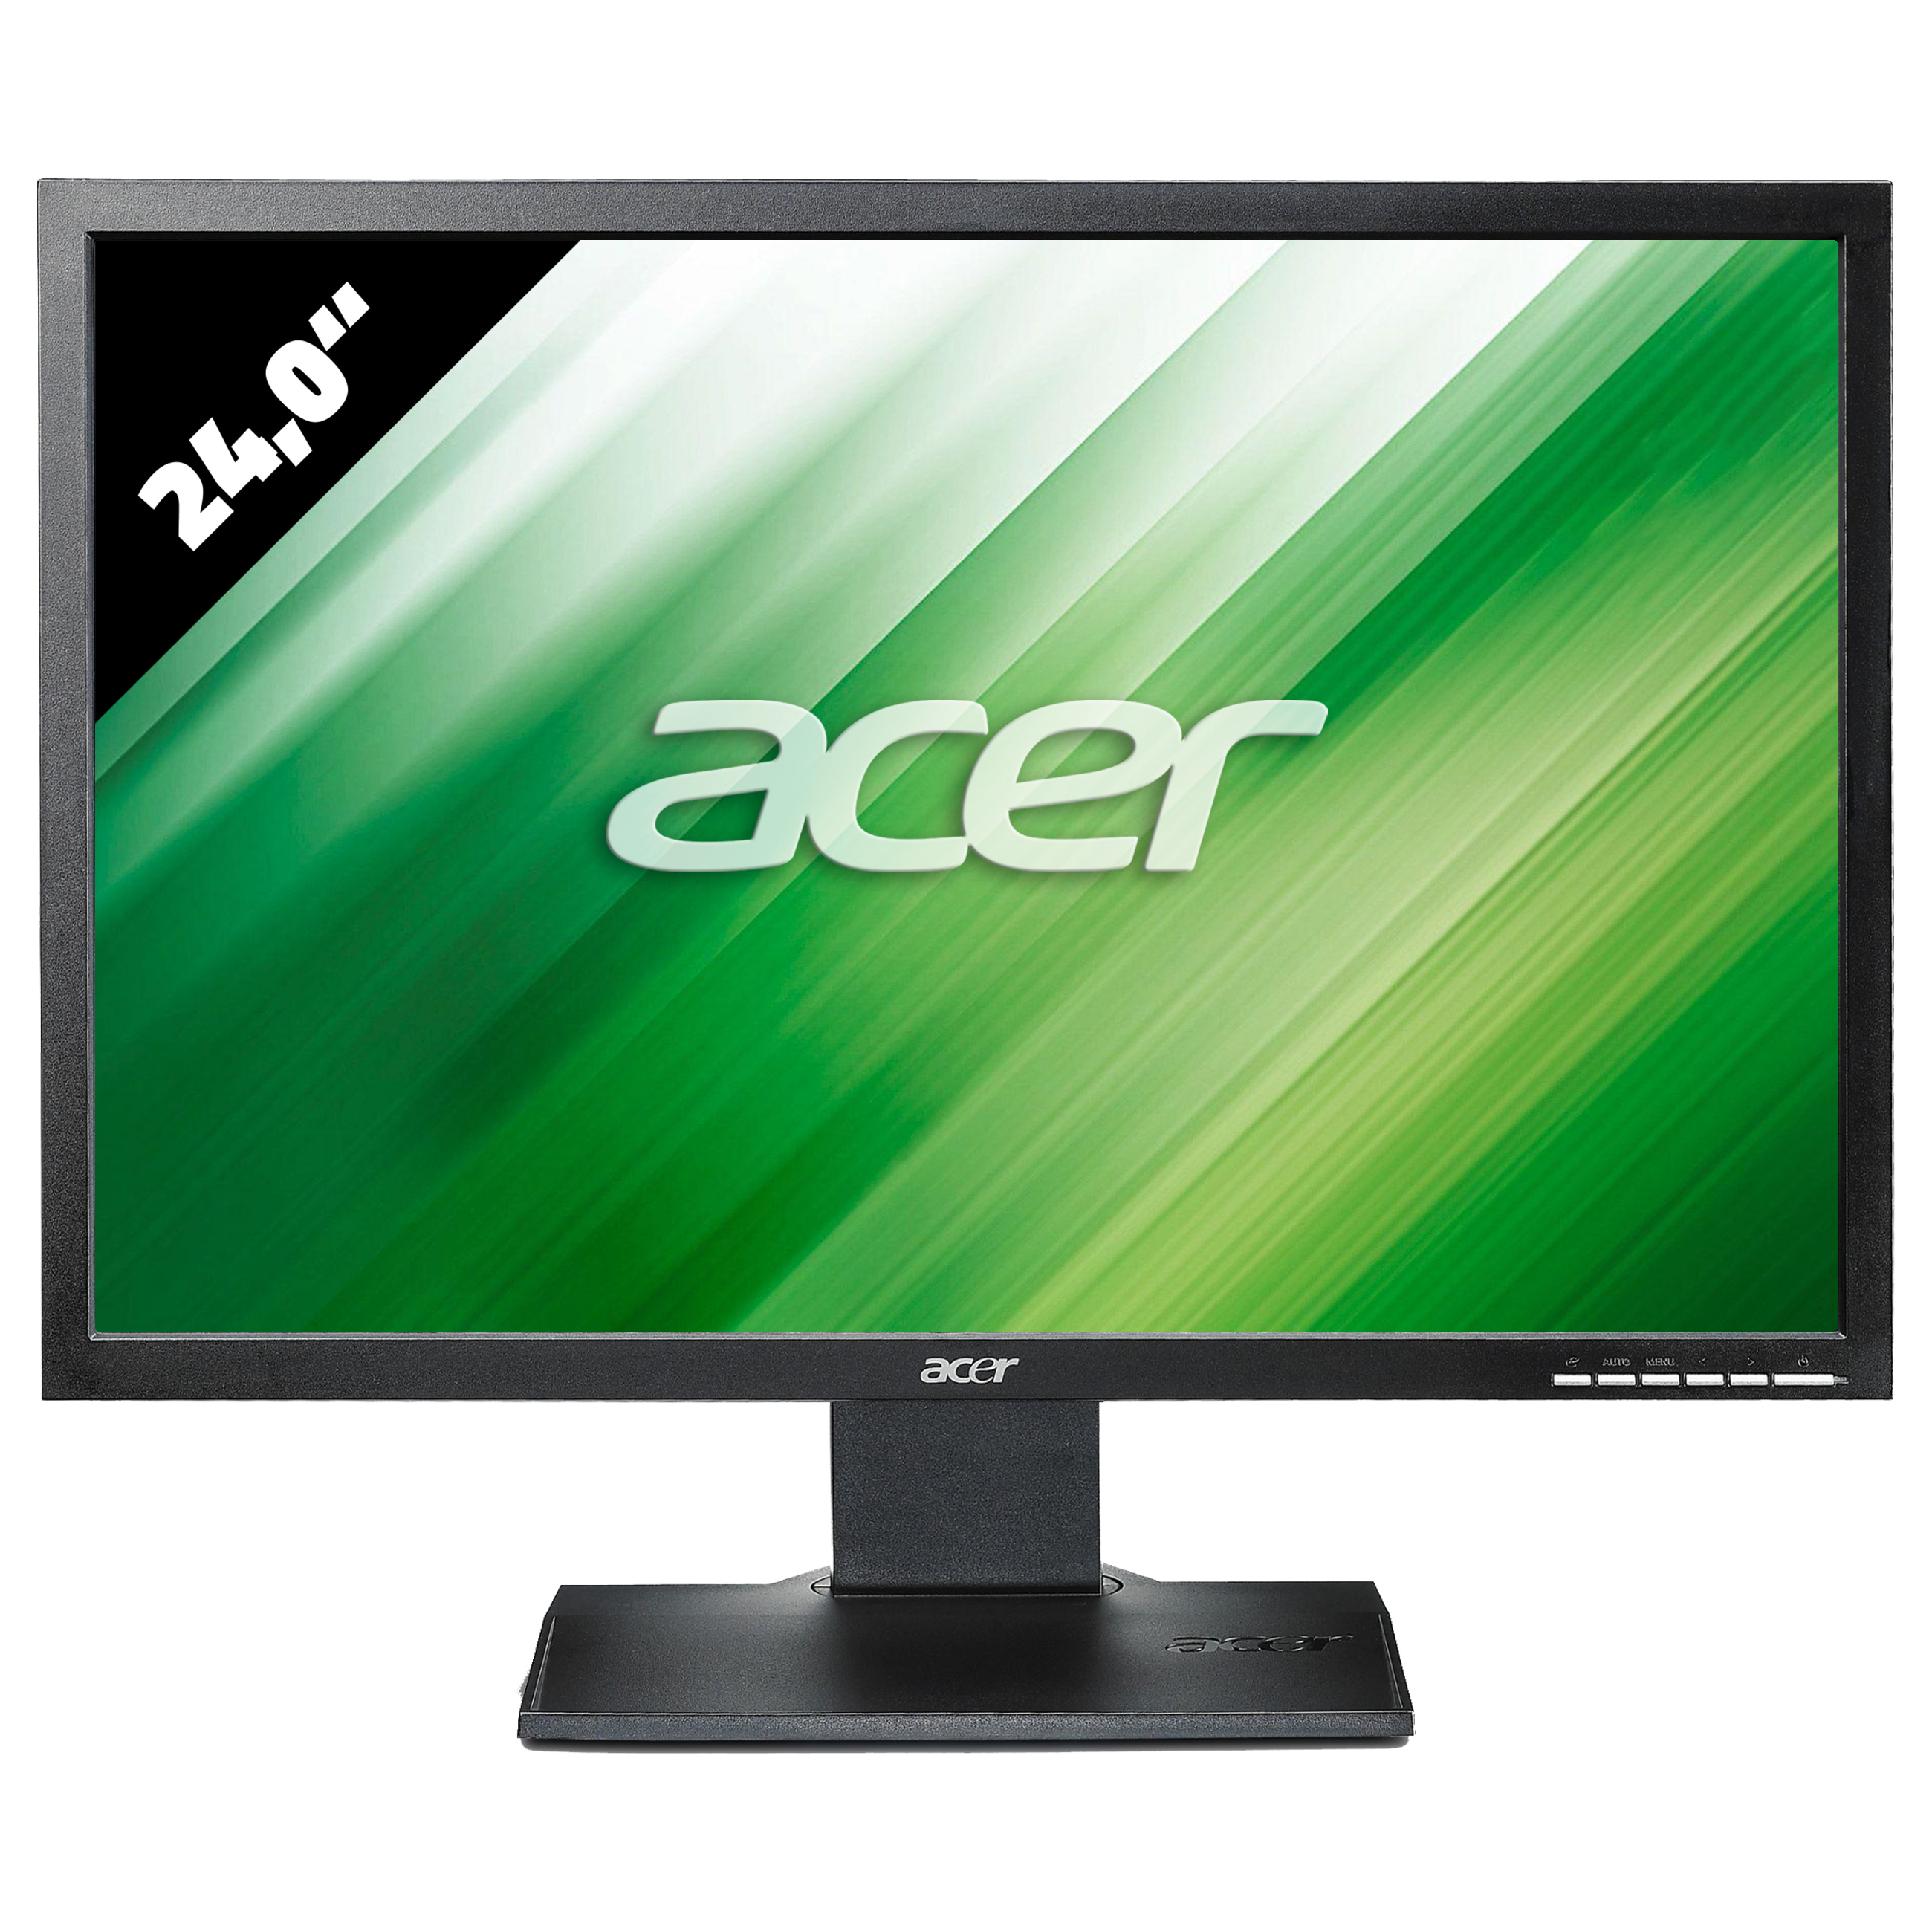 Acer B243W - 1920 x 1200 - WUXGA